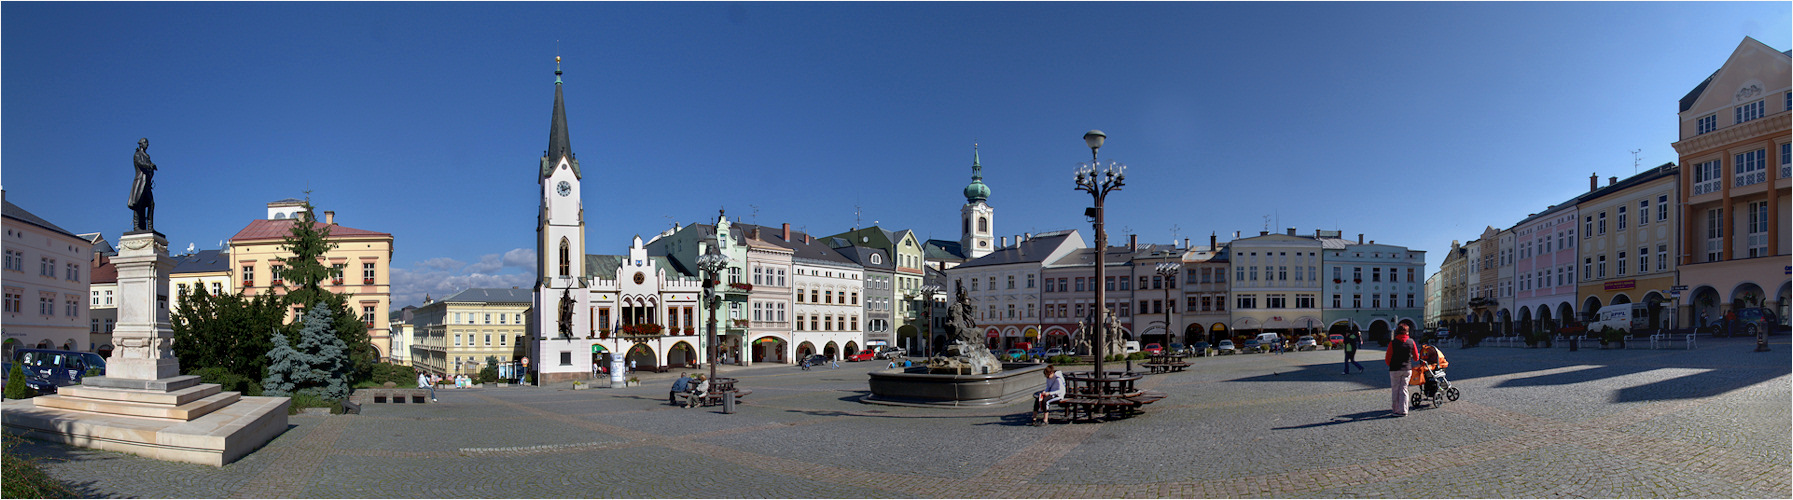 Marktplatz Trutnov